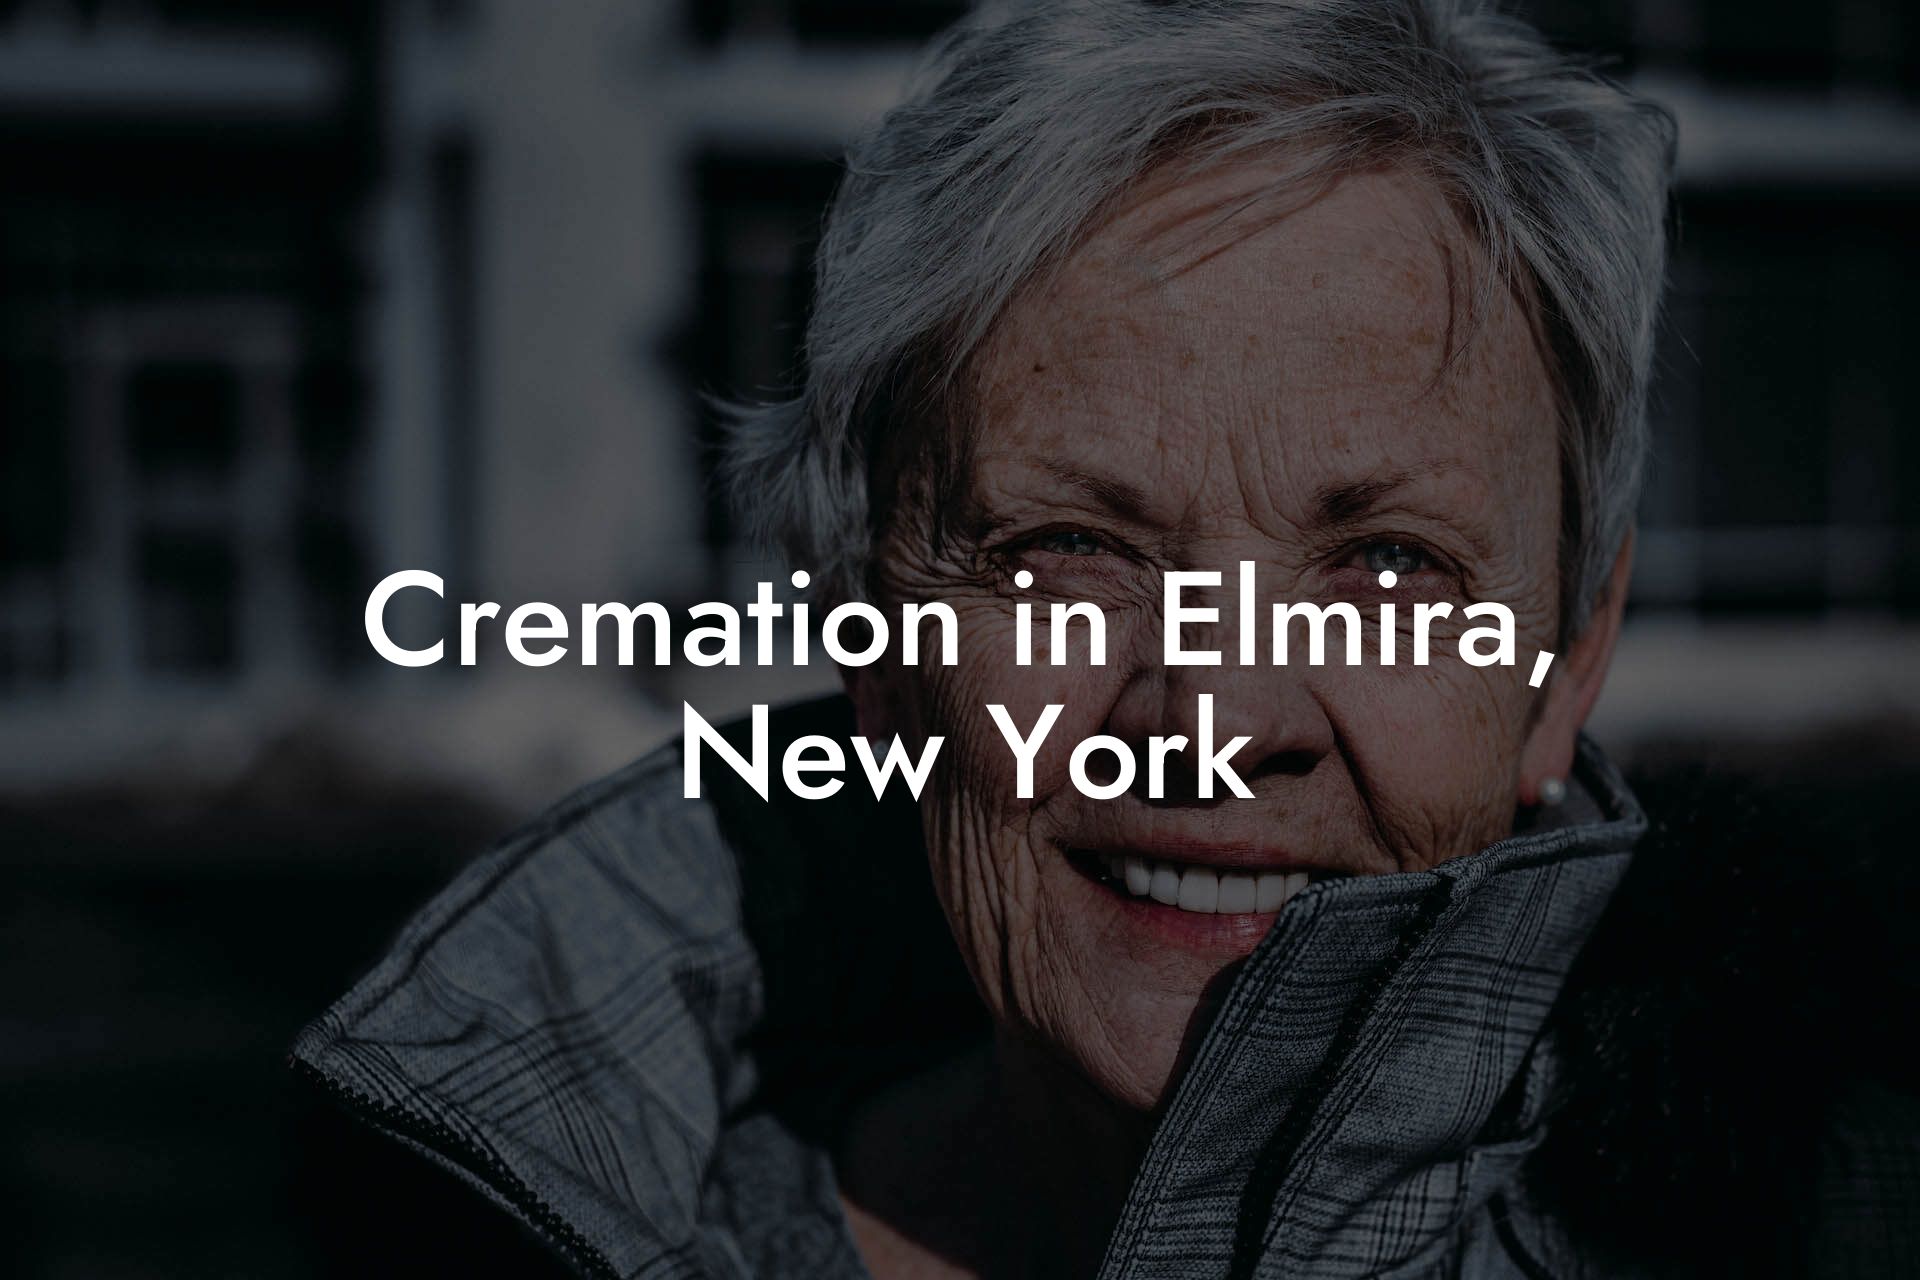 Cremation in Elmira, New York